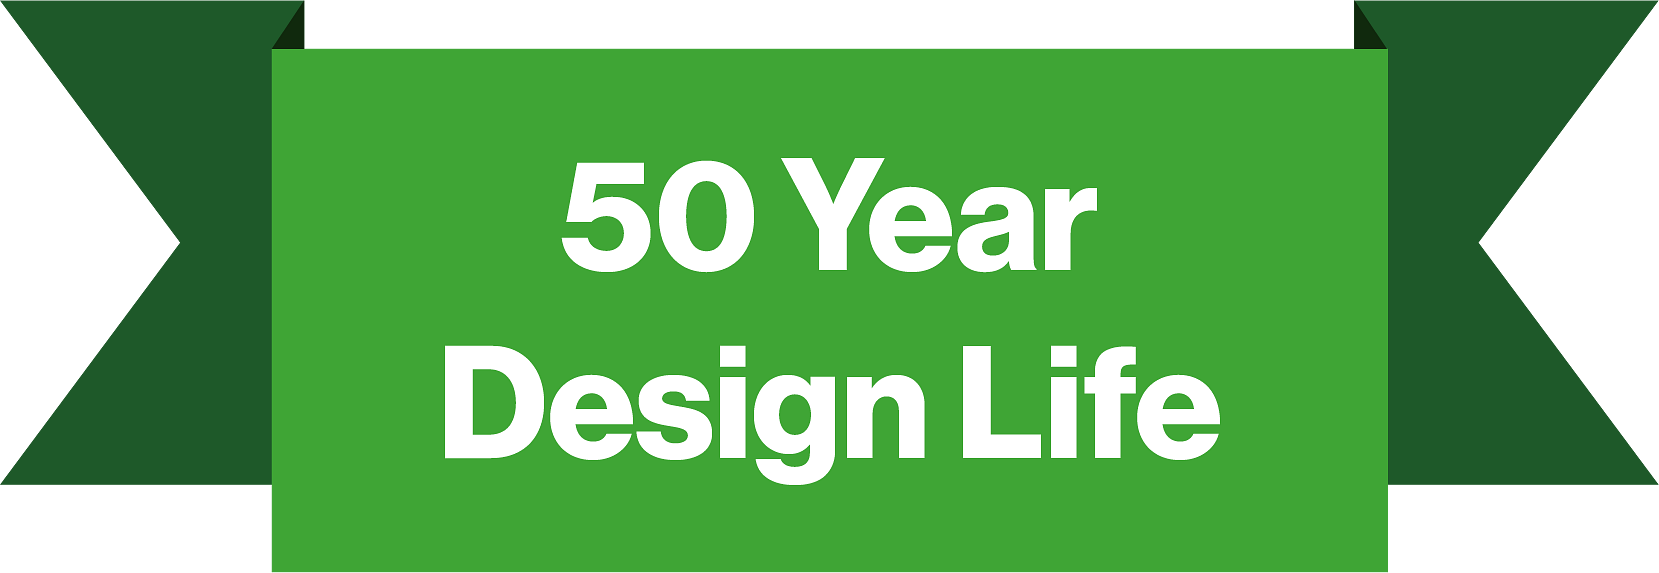 50 Year Design Life